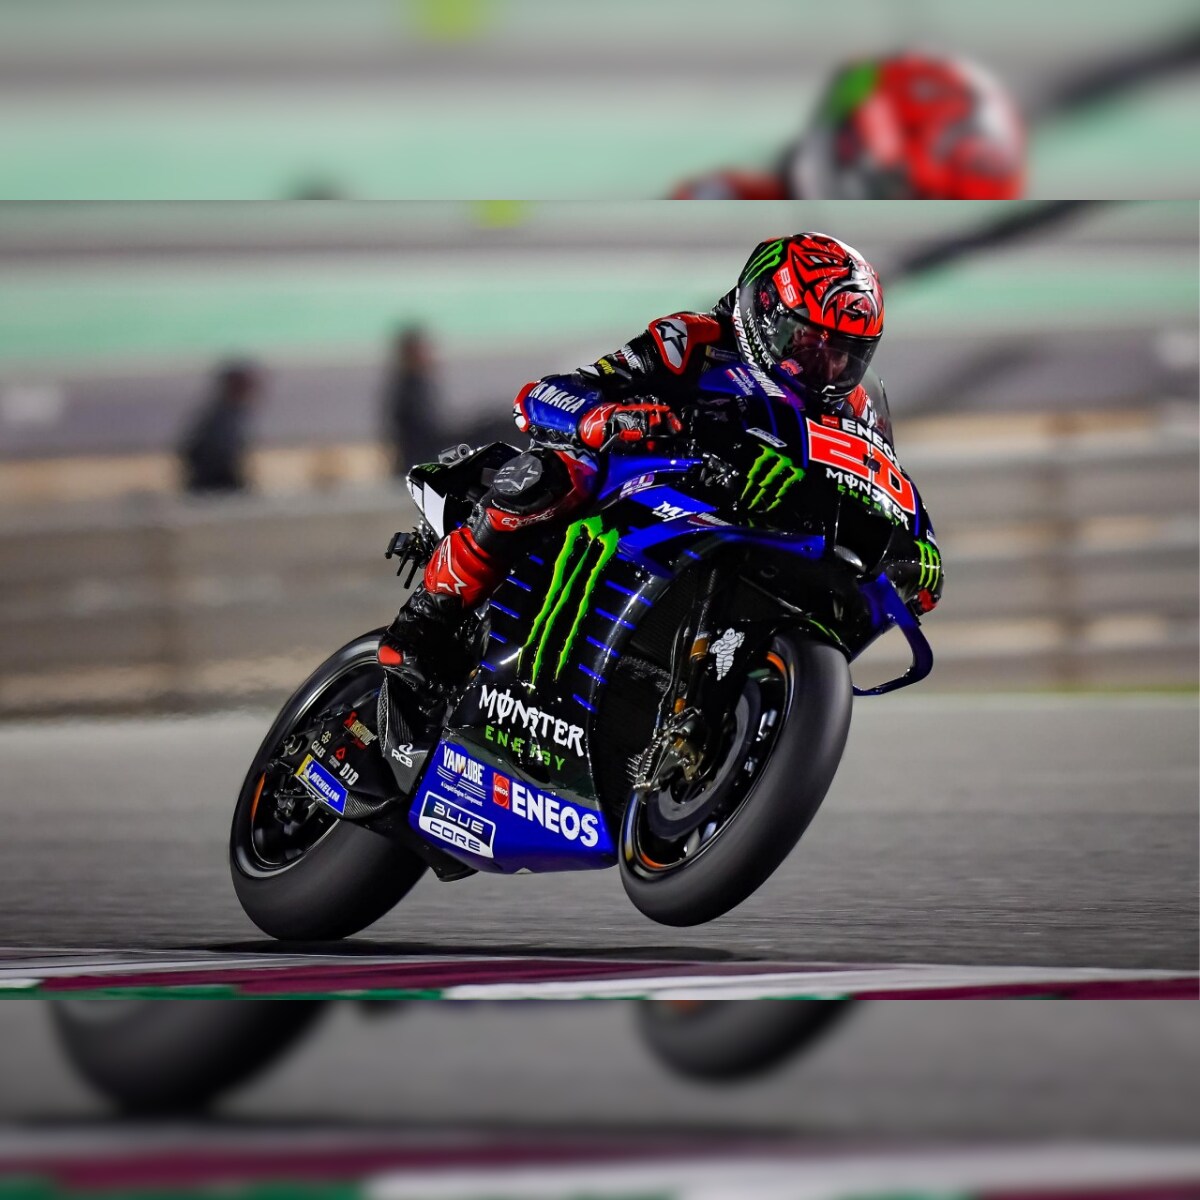 MotoGP: Fabio Quartararo Claims Victory in a Breathless Doha Dogfight